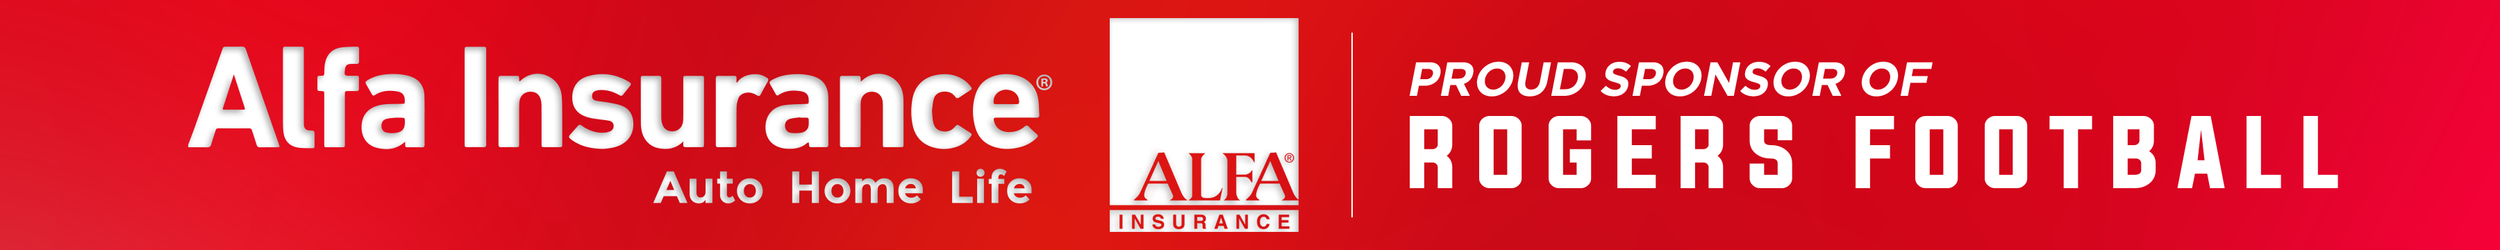 Alfa Insurace banner.png